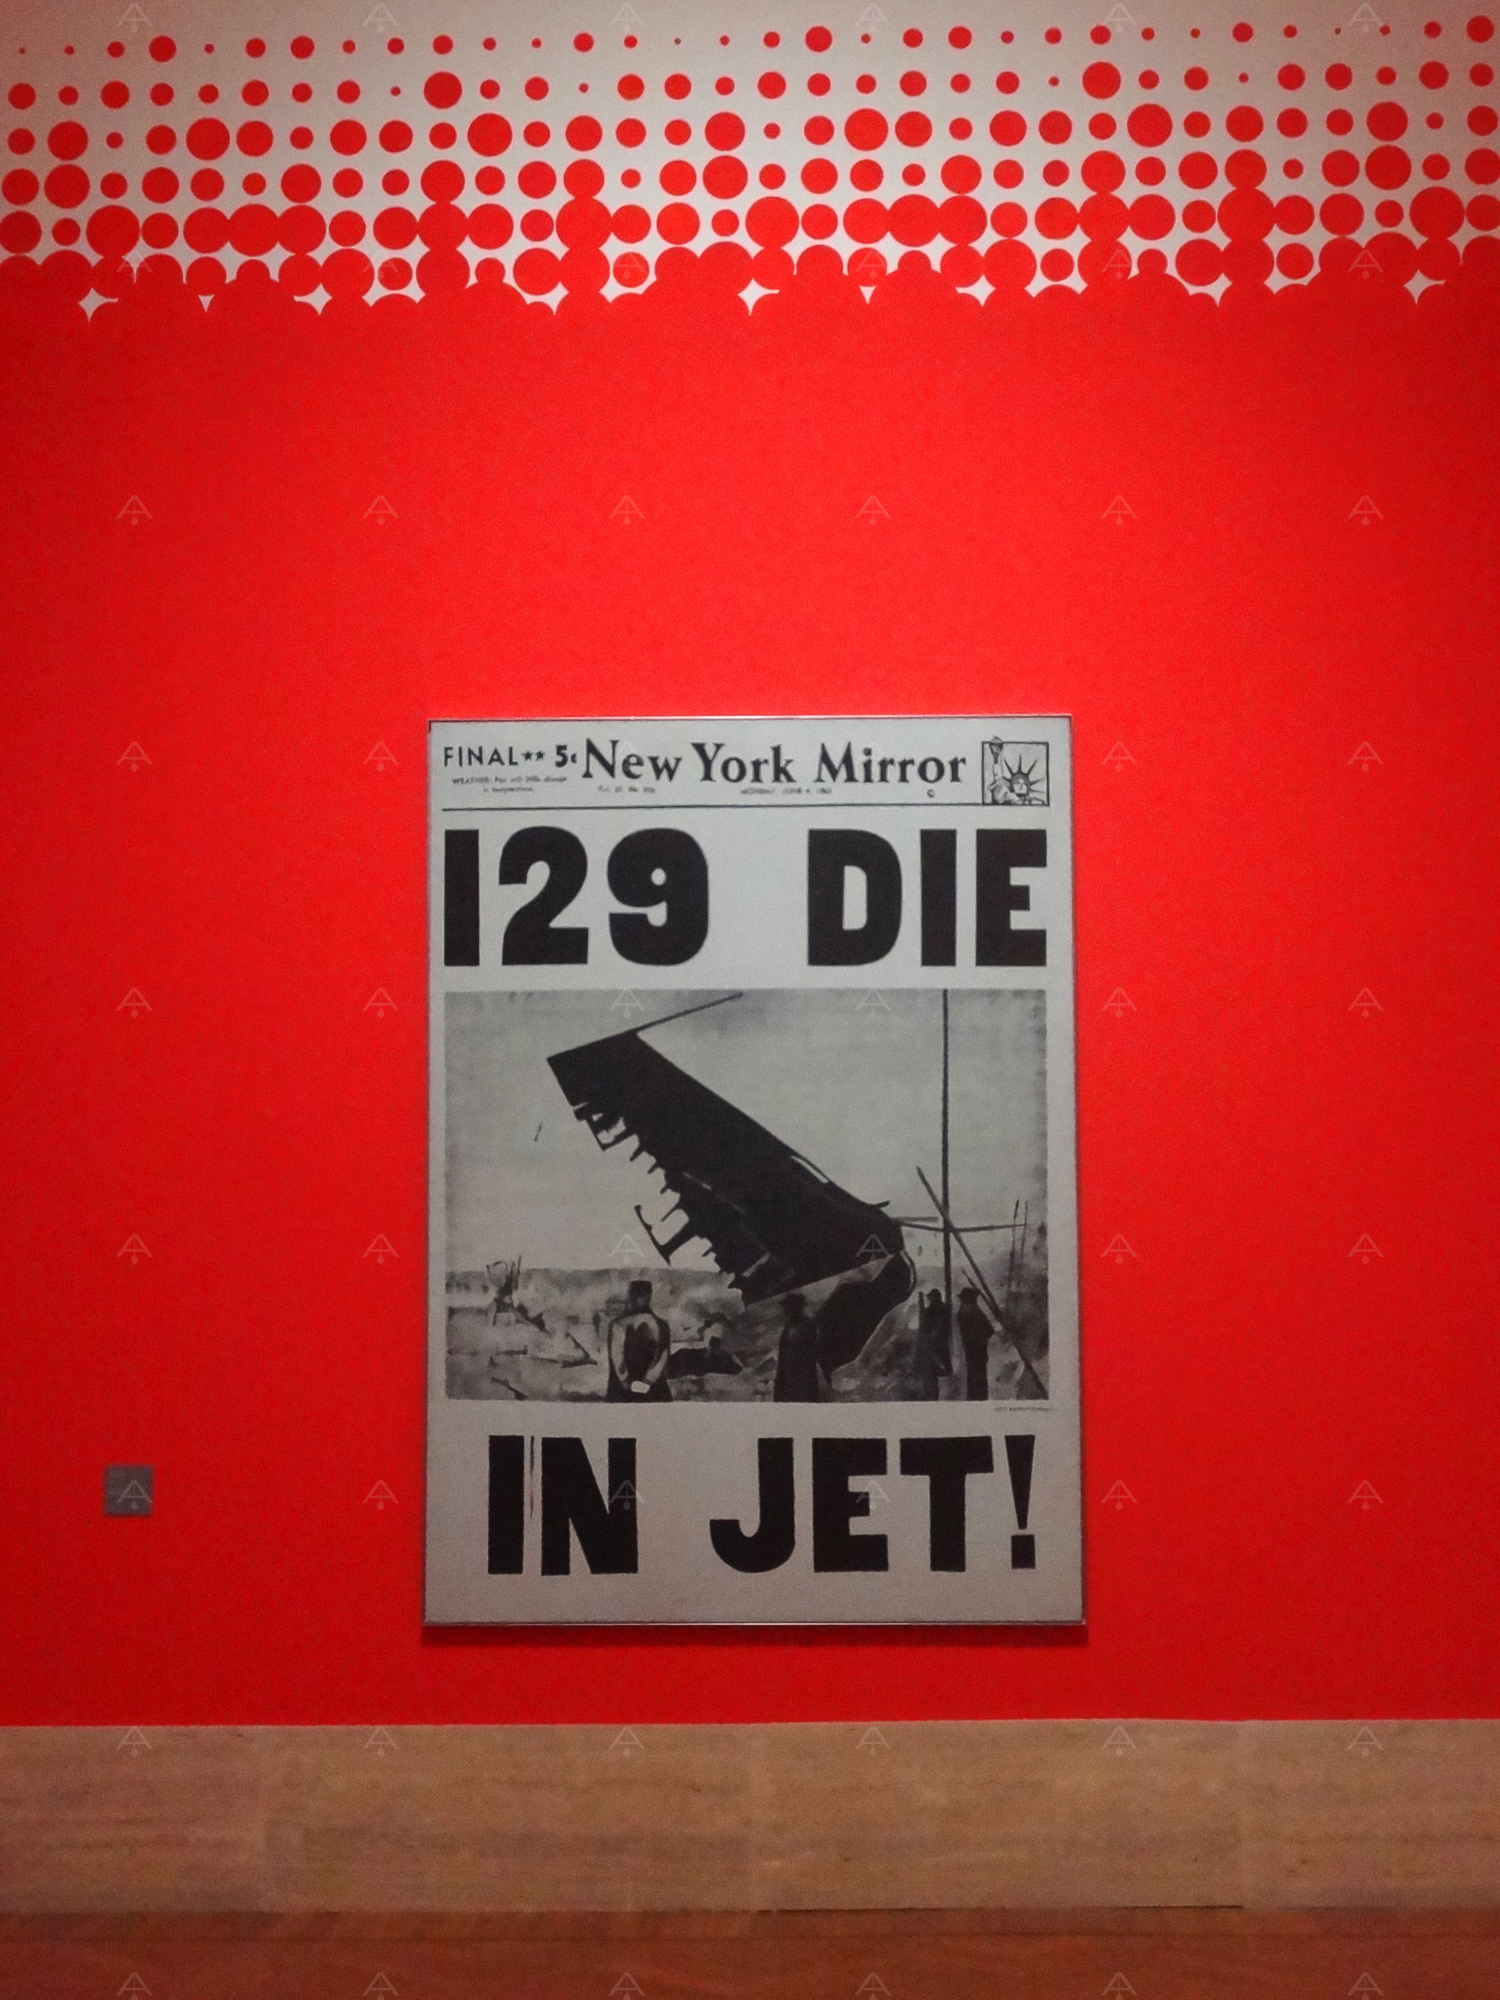 Warhol; exhibition design; allestimento museale; mostra Warhol